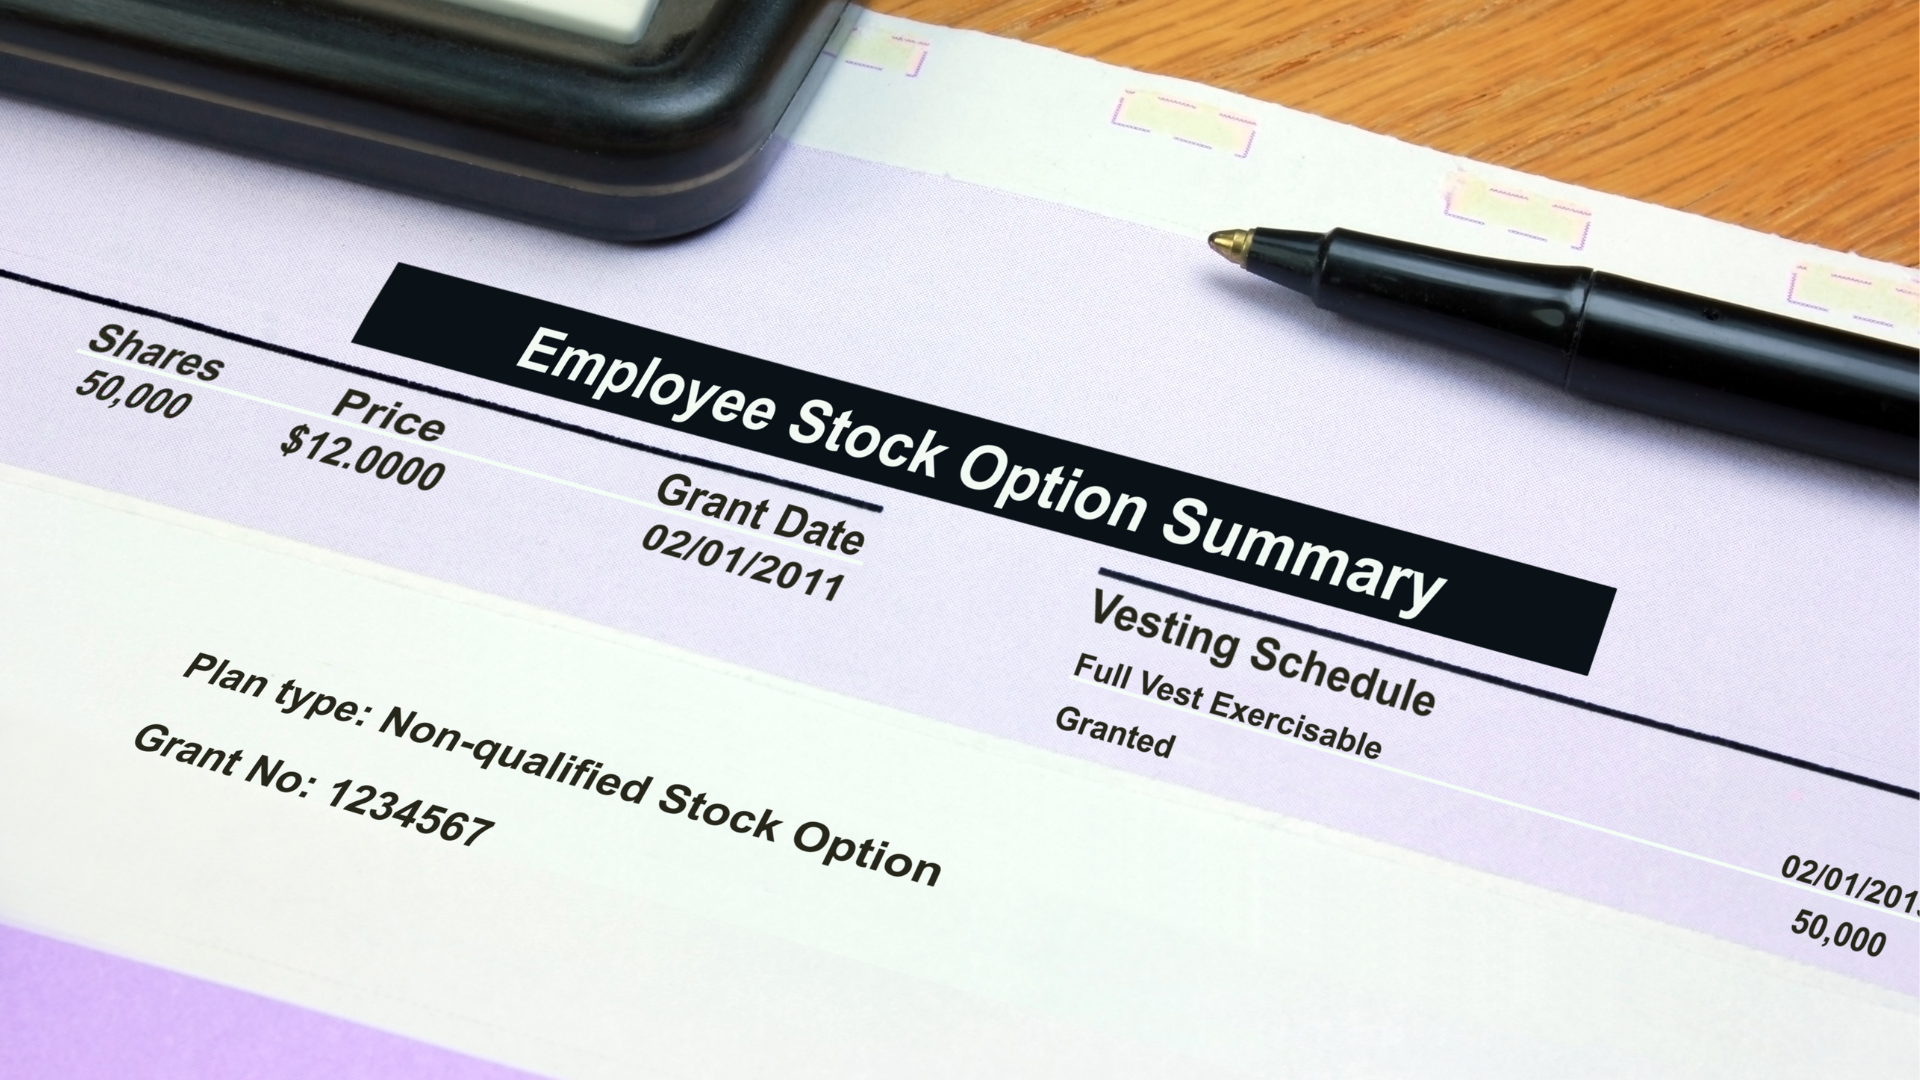 Employee Stock Option Summary